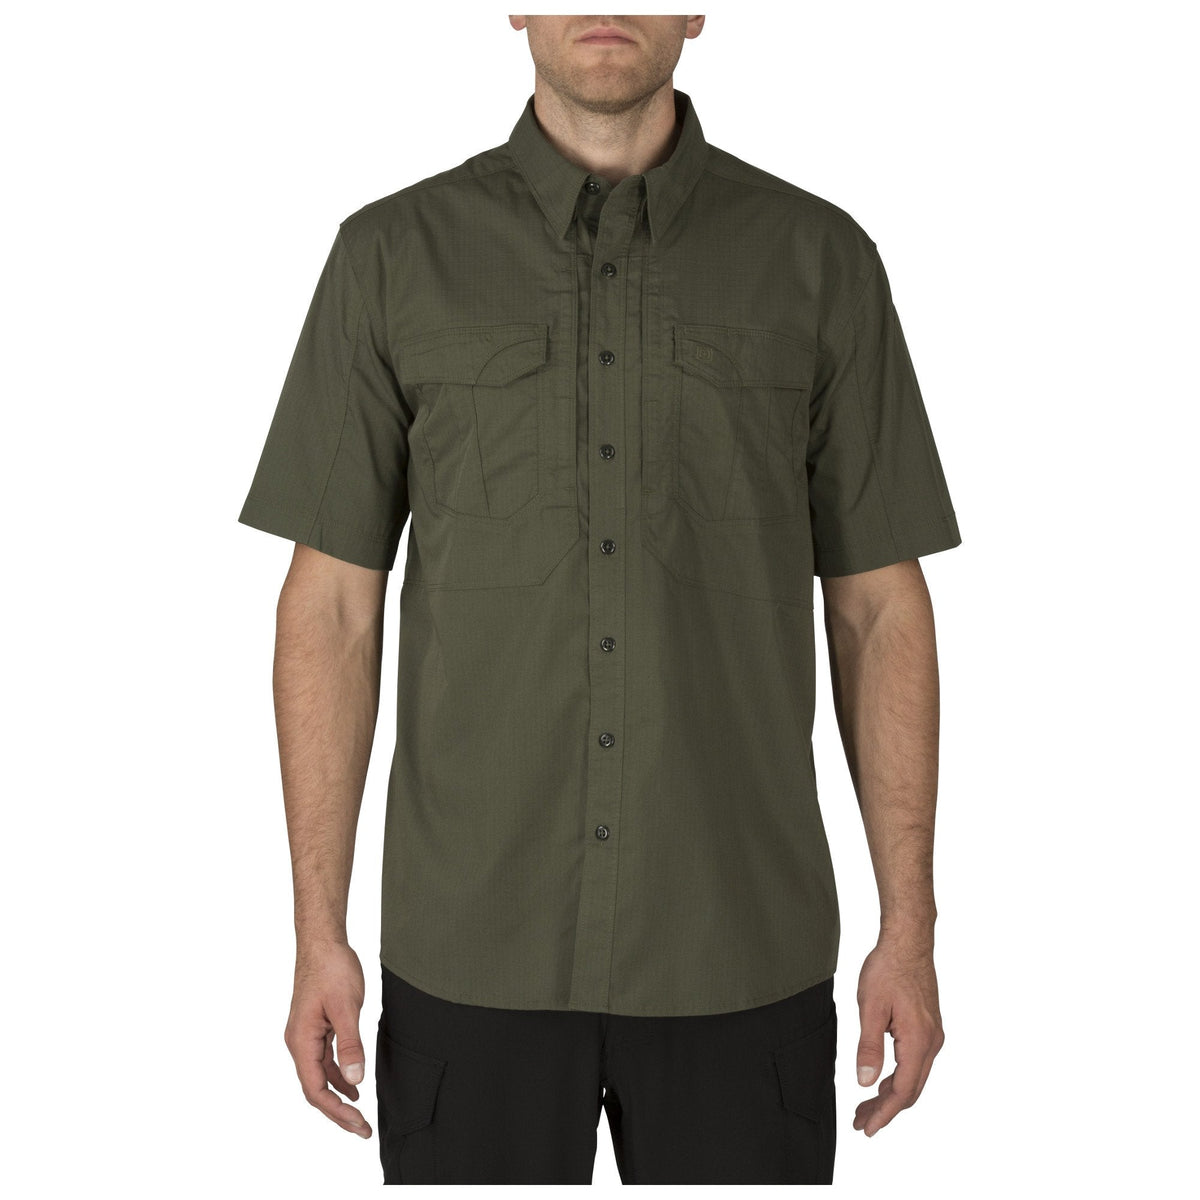 5.11 Tactical Stryke Short Sleeve Shirts TDU Green Shirts 5.11 Tactical Small Tactical Gear Supplier Tactical Distributors Australia